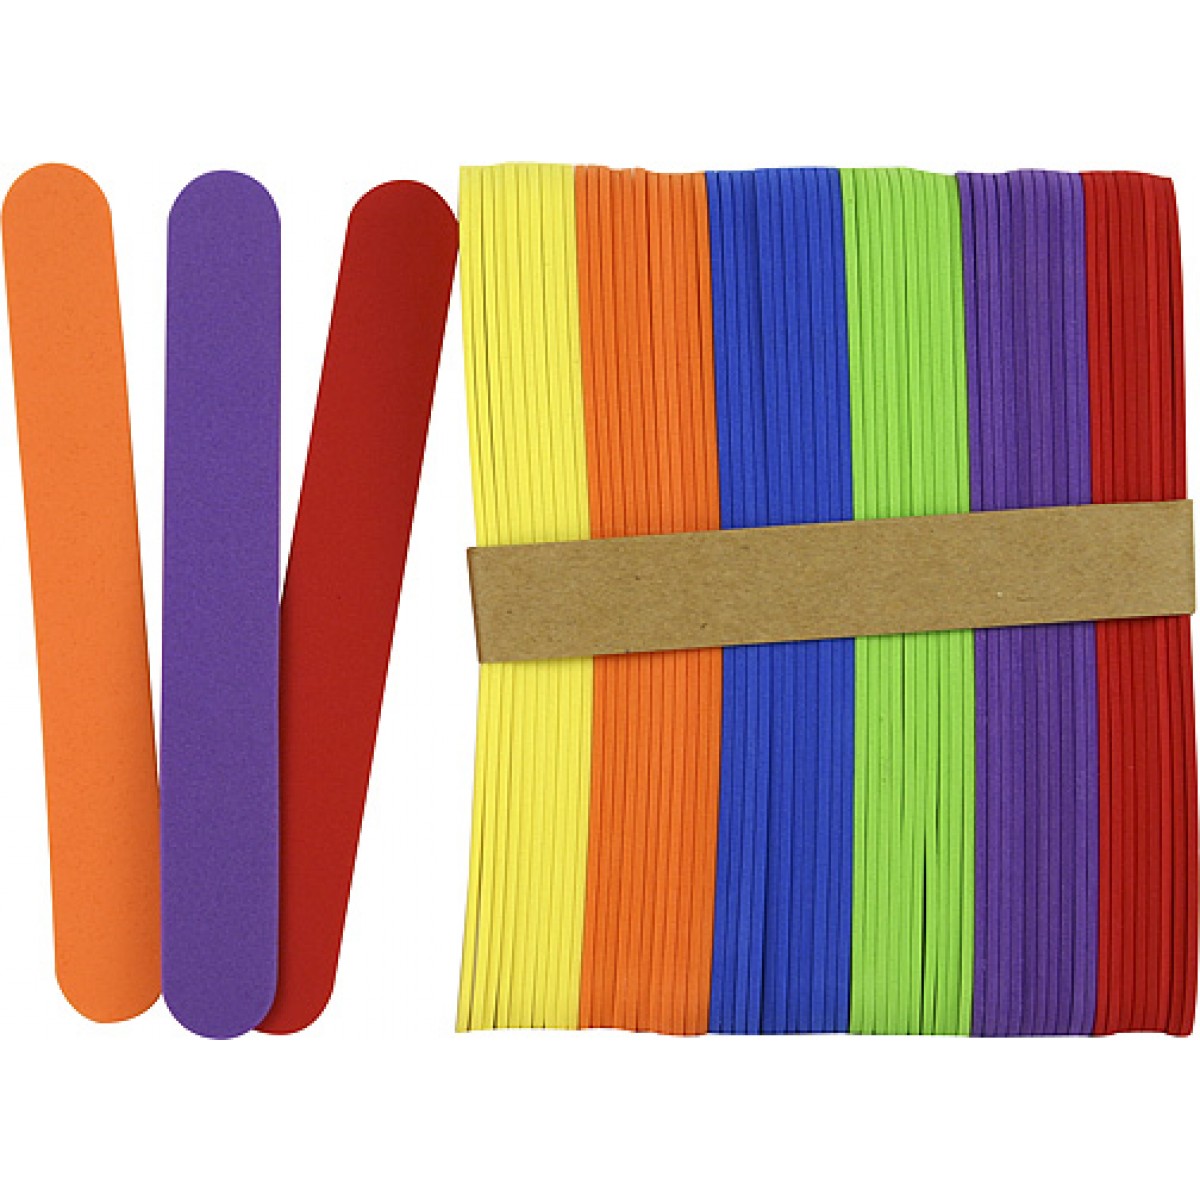 WonderFoam Jumbo Craft Sticks, Assorted Colors, 6 x 3/4, 100